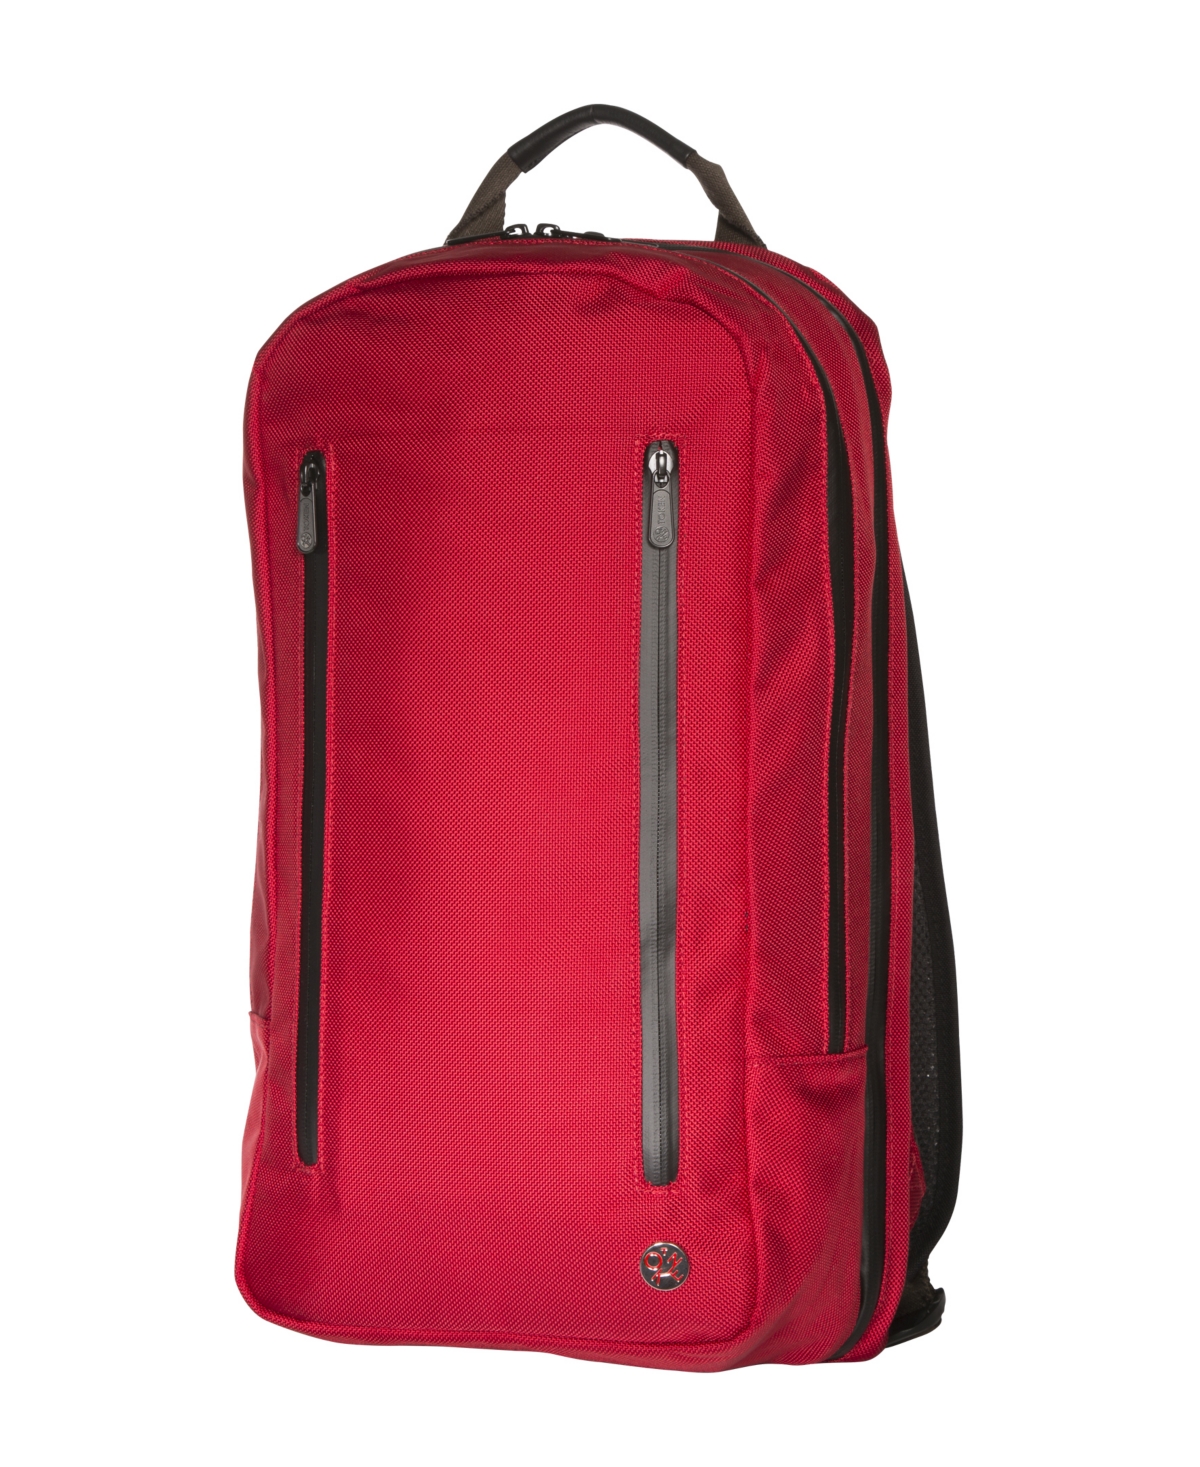 Bay Ridge Backpack - Red